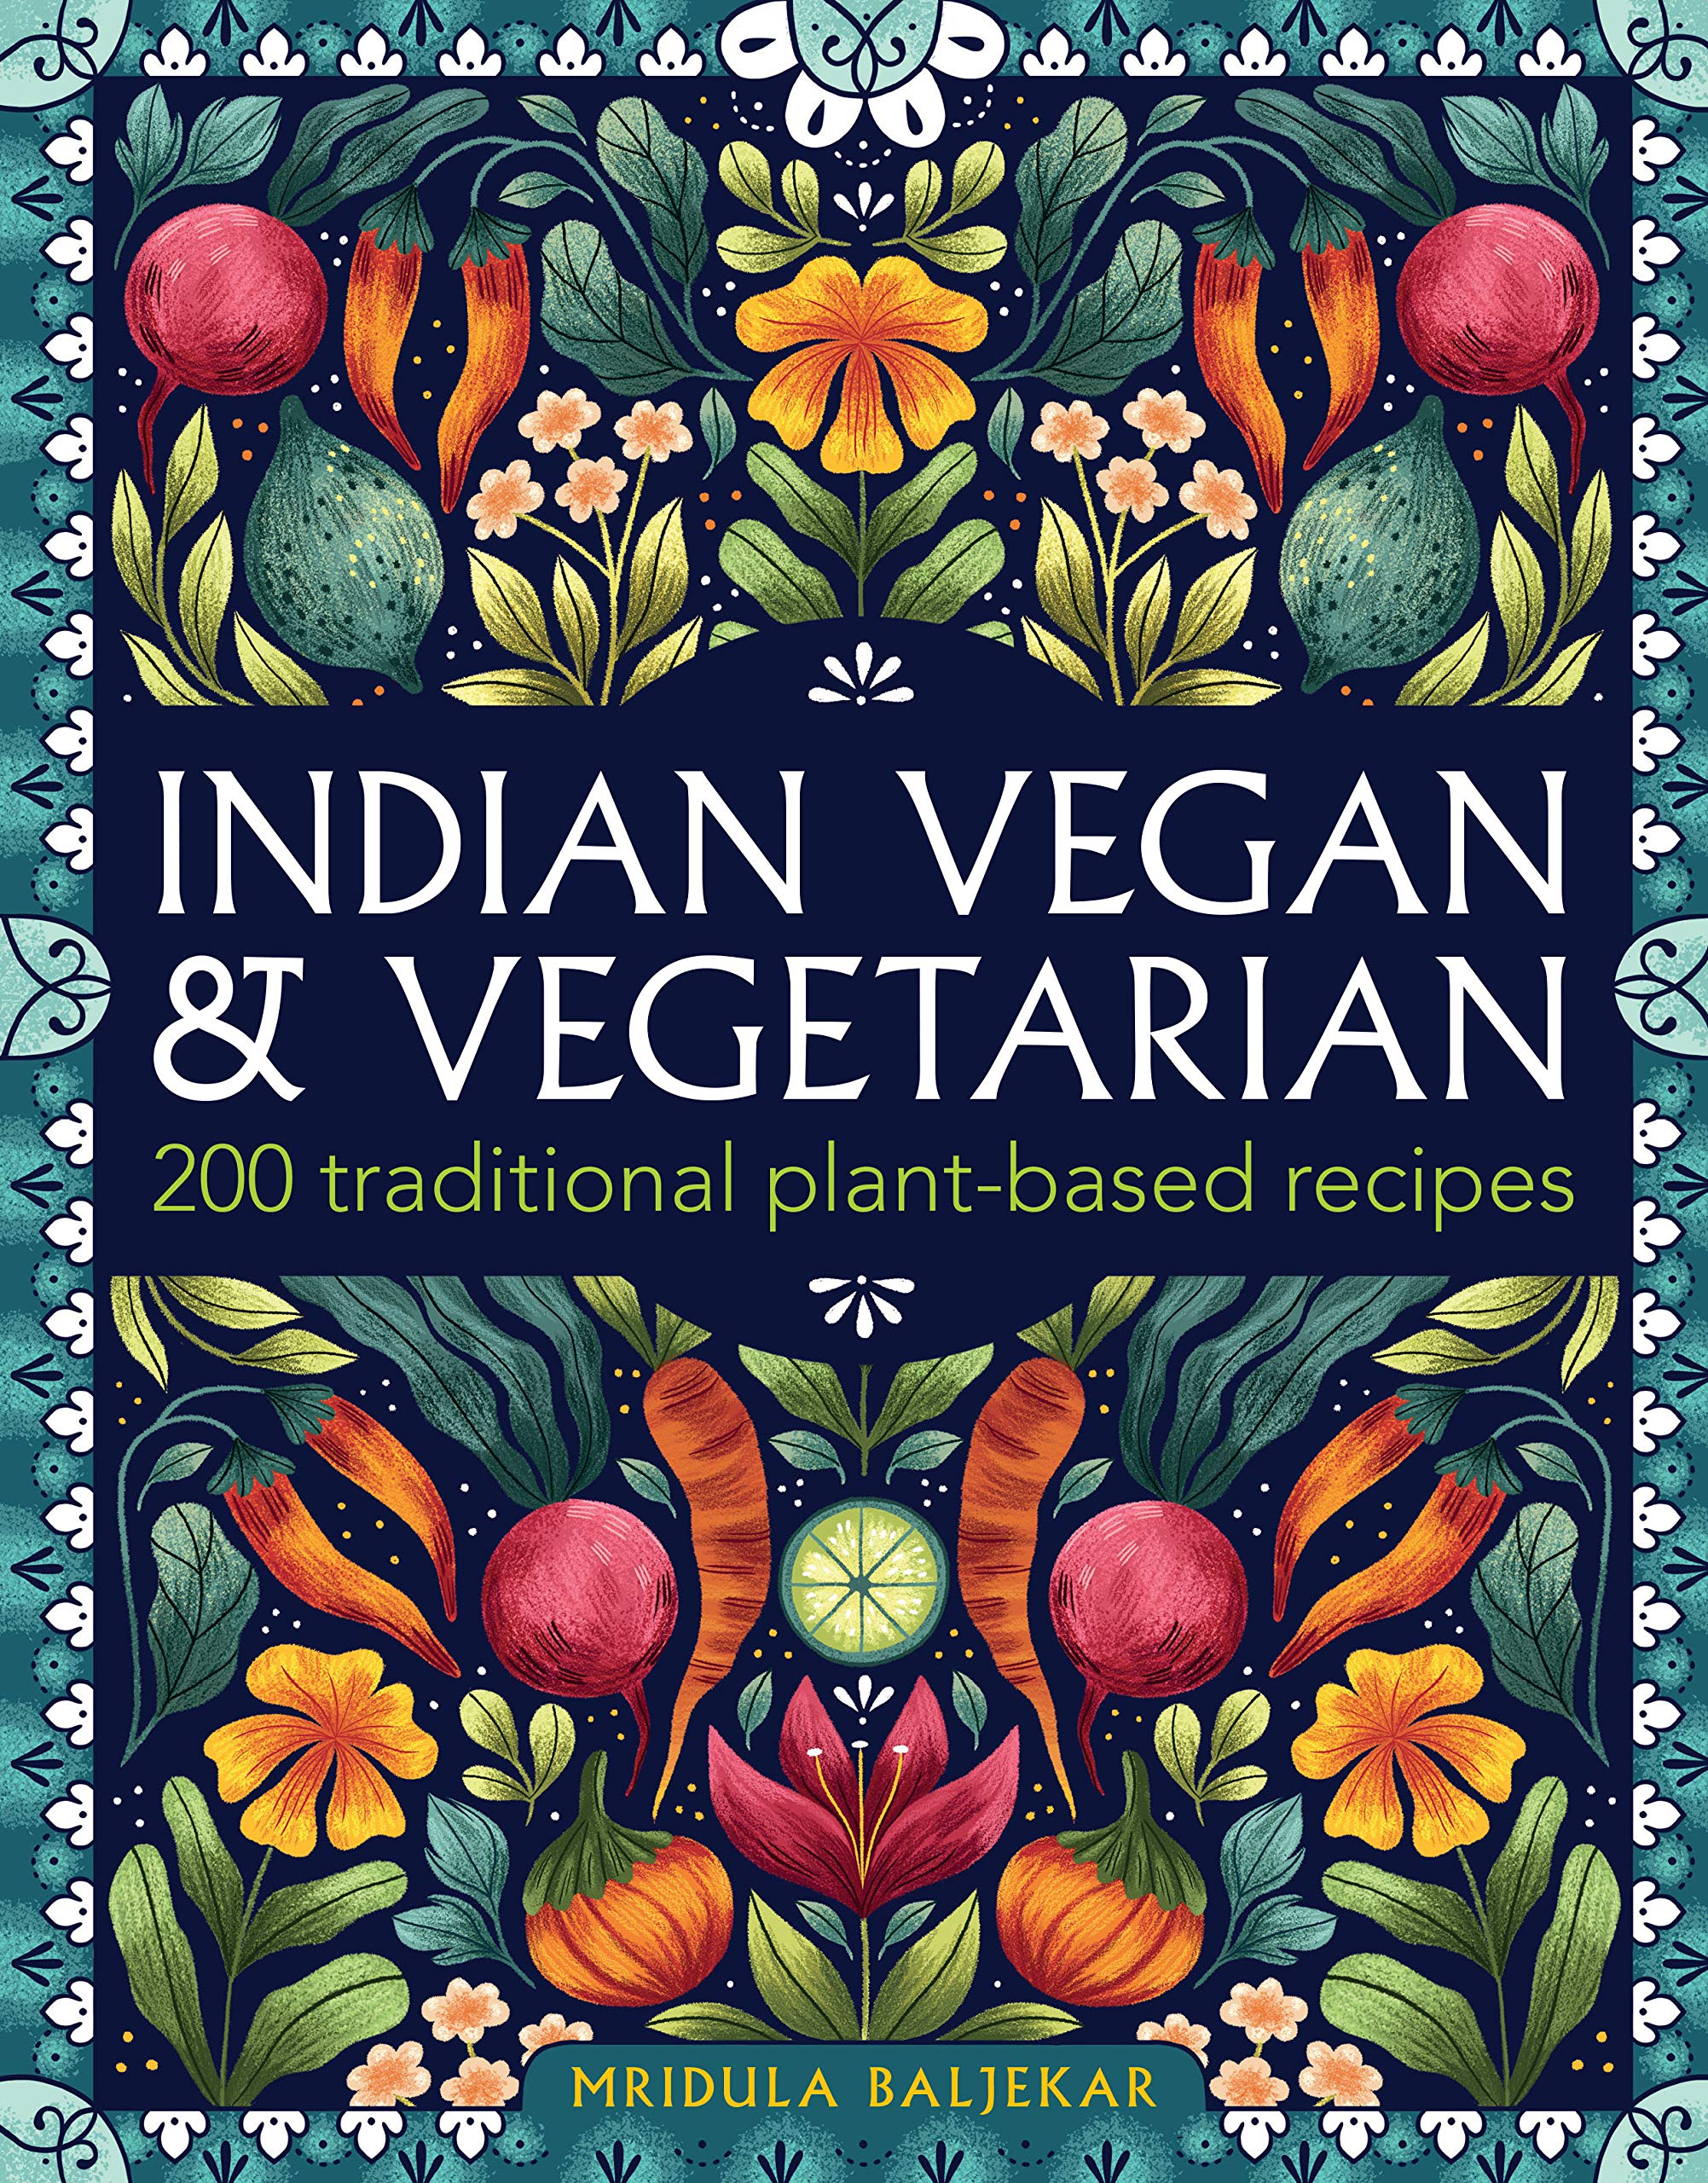 Indian Vegan & Vegetarian: 200 Traditional Plant-Based Recipes (Mridula Baljekar)